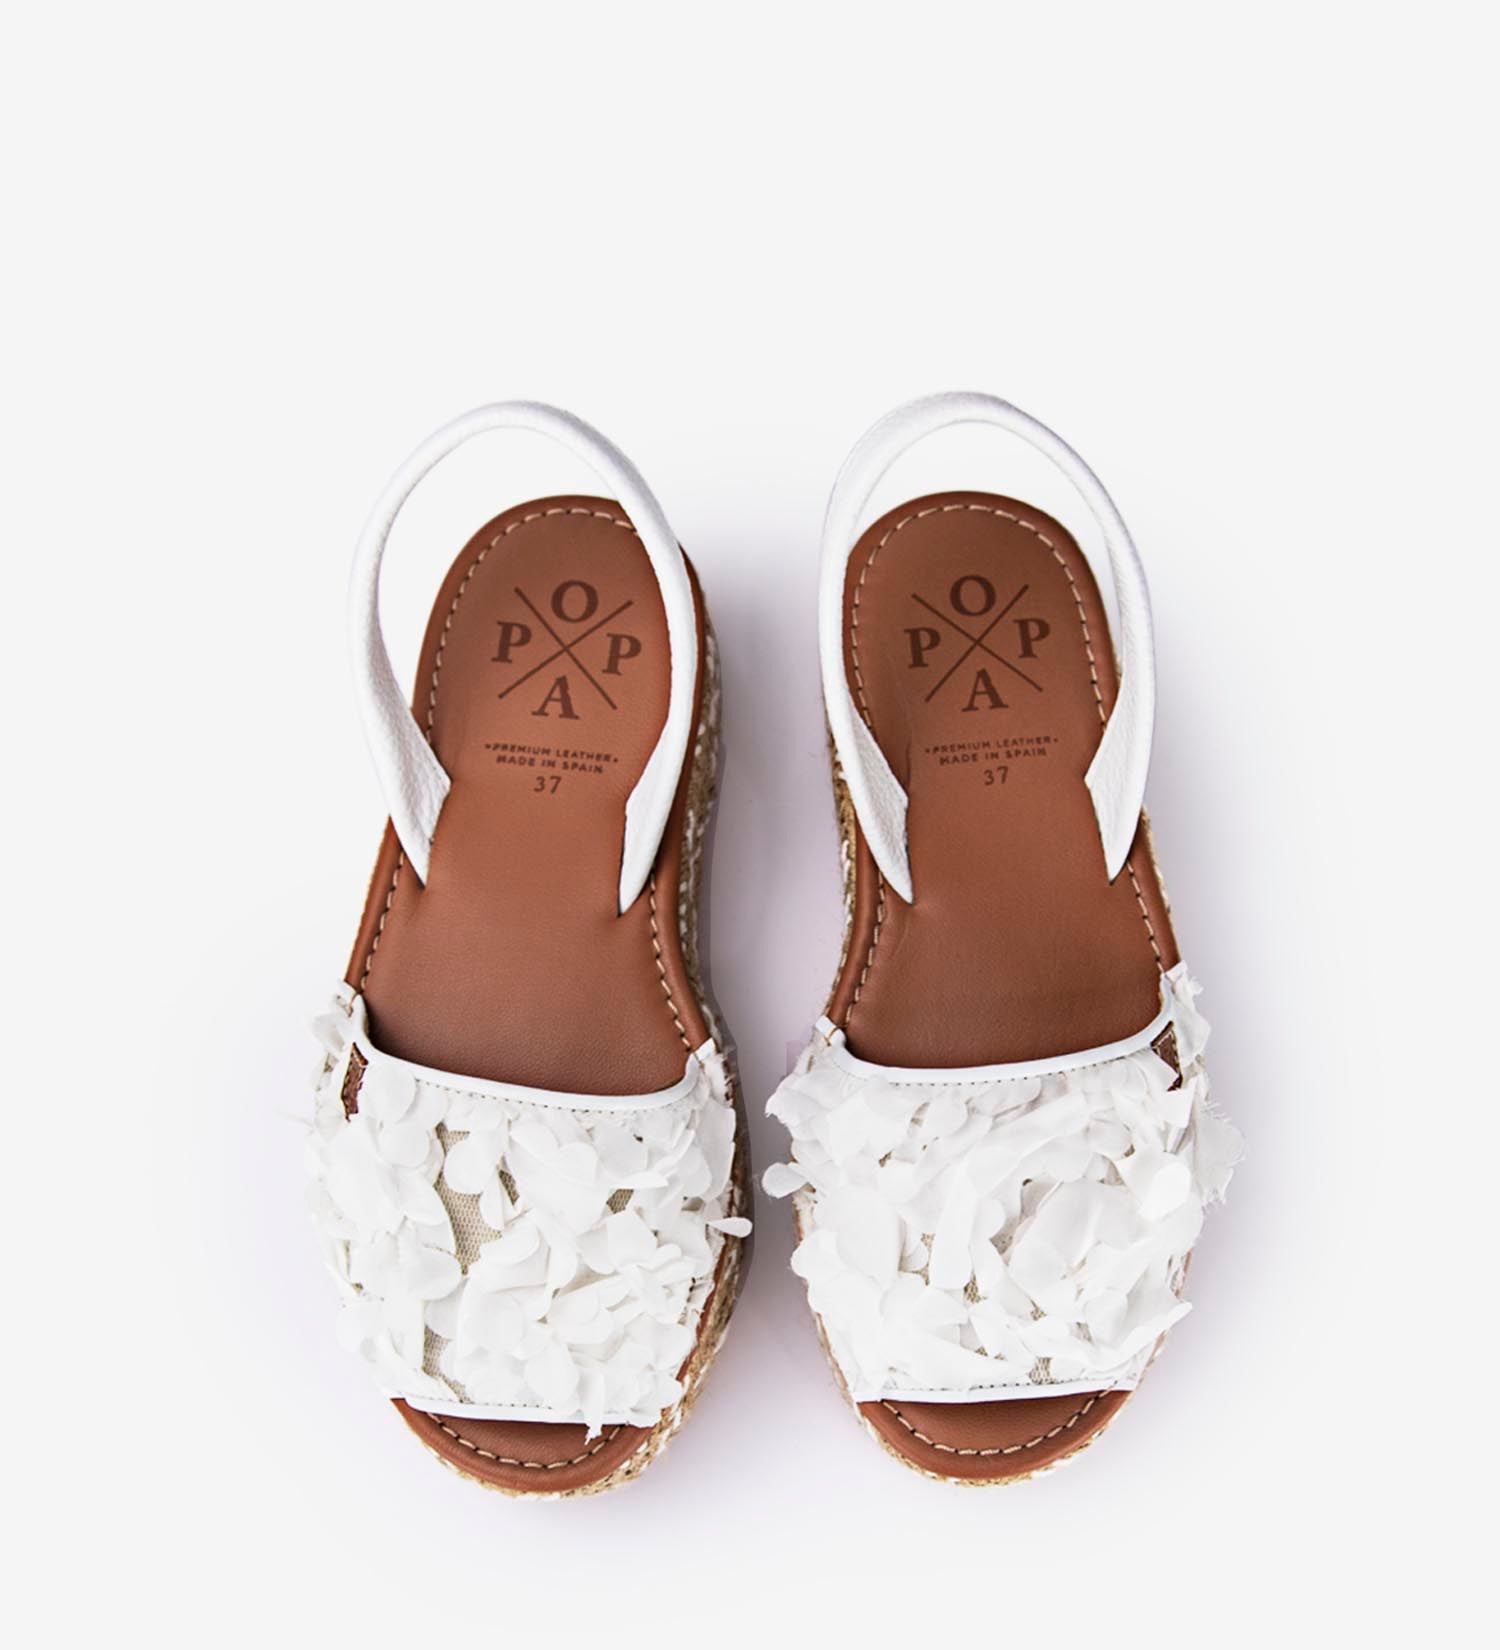 POPA White Petals Avarca Sandals